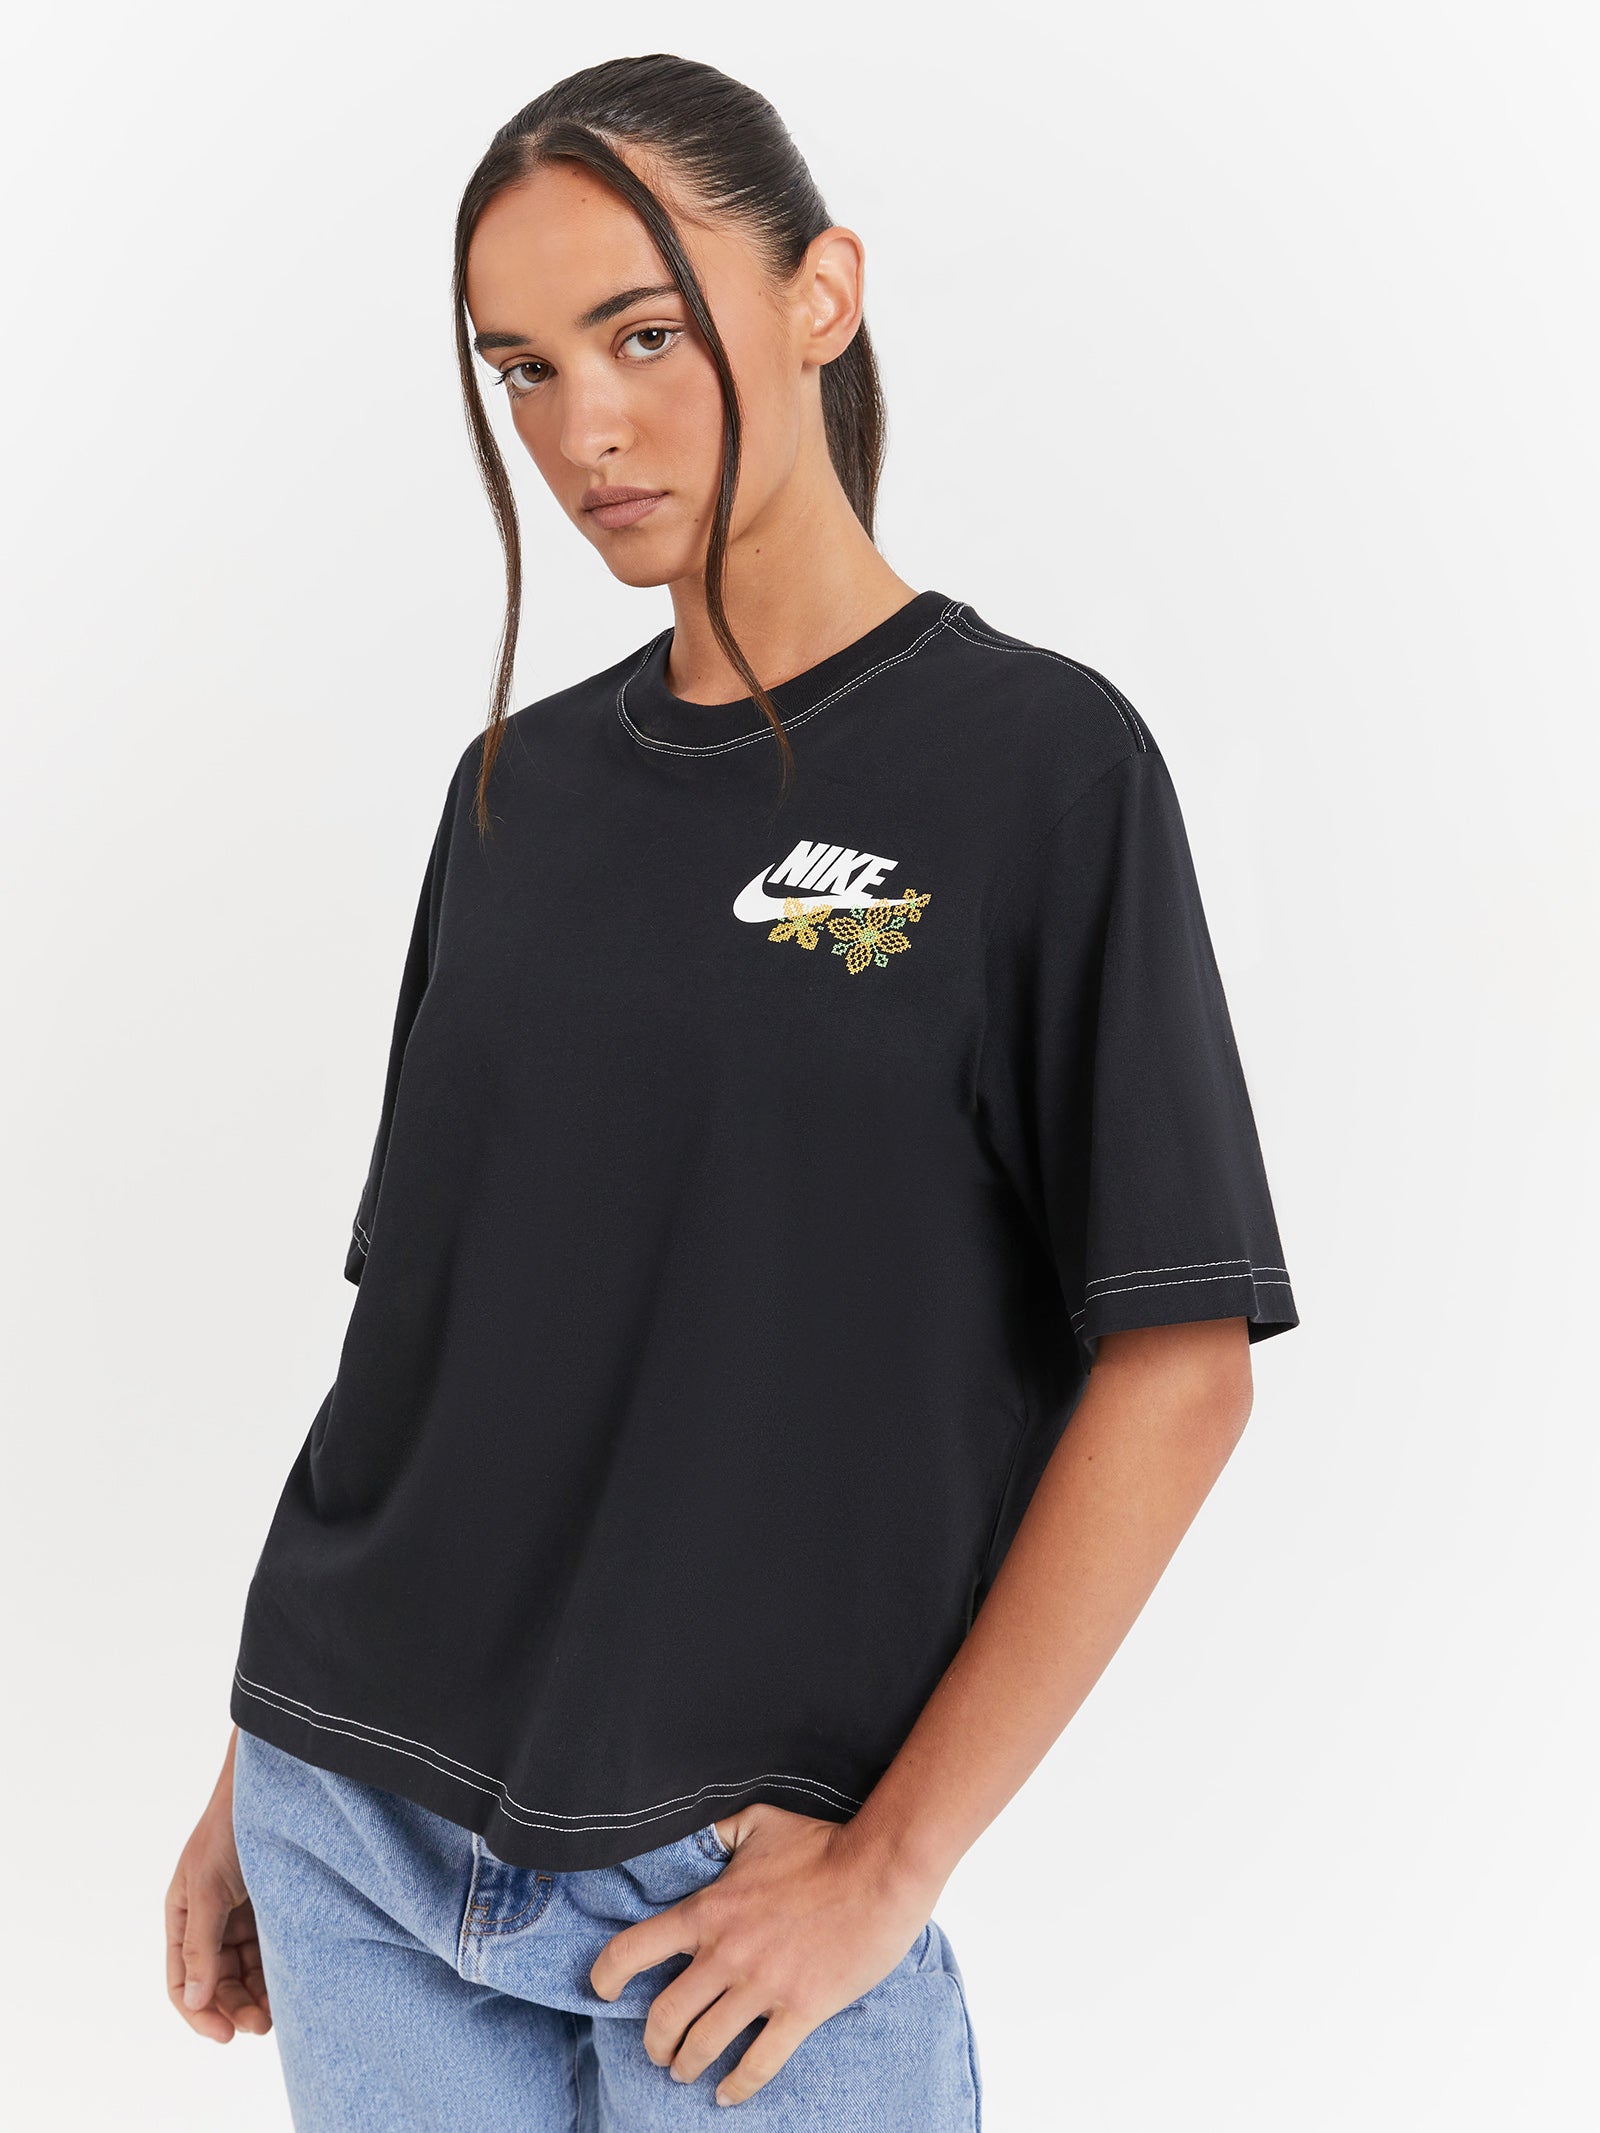 Boxy T-Shirt Black Glue Short in Store OC1 Sportswear Sleeve -